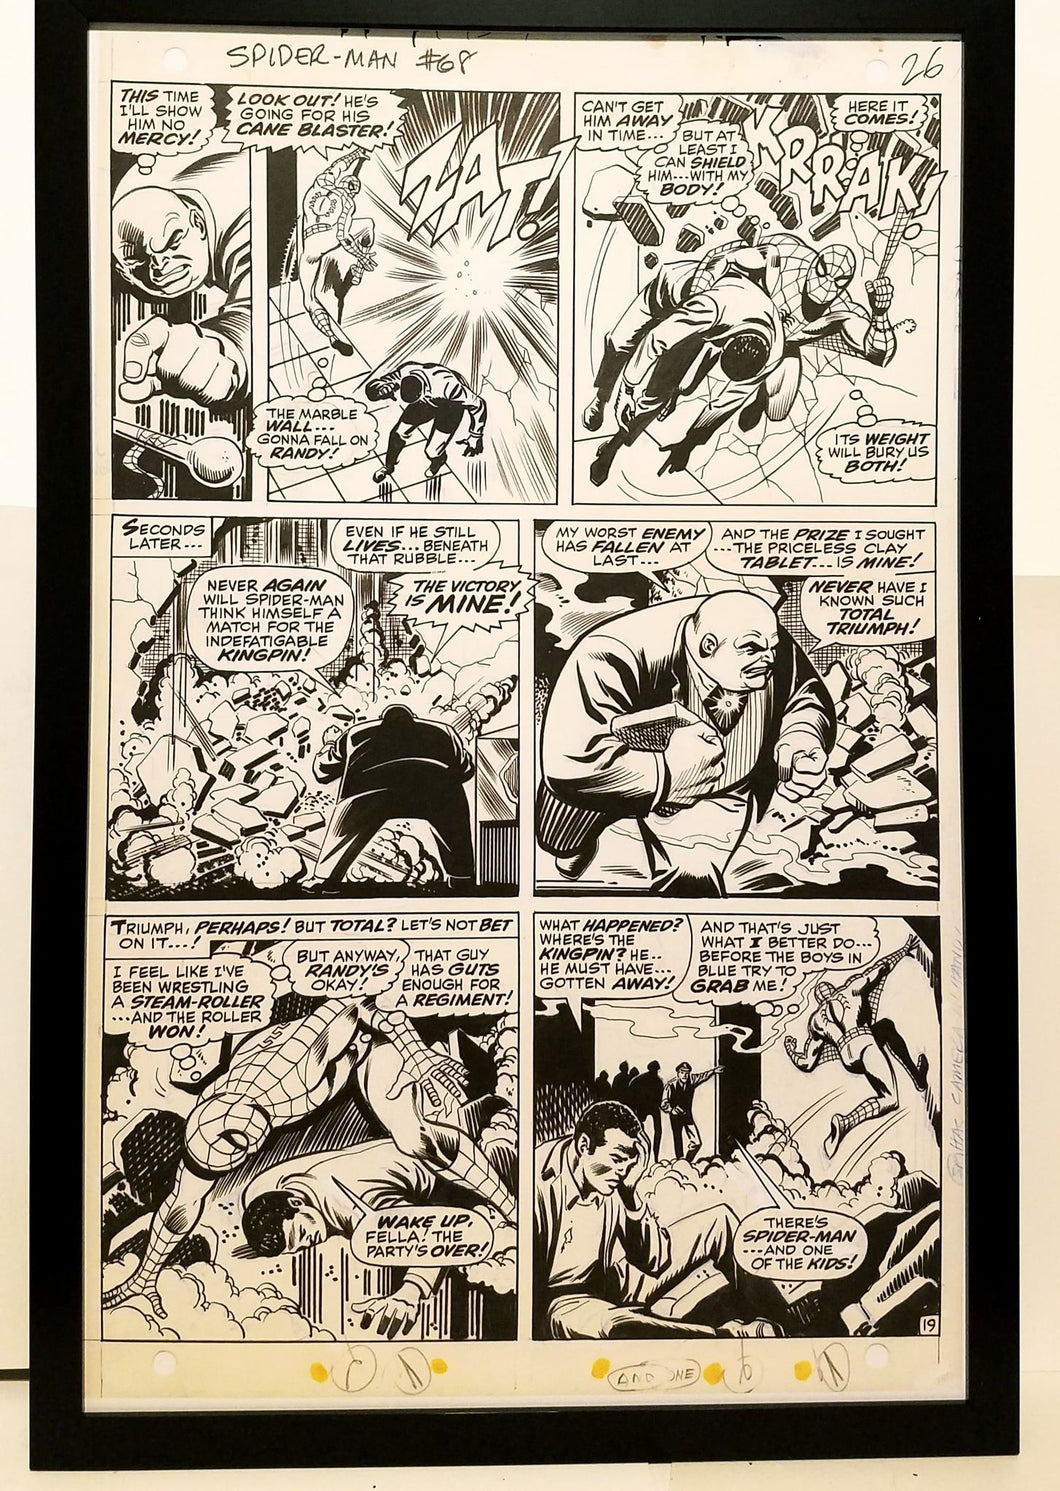 Amazing Spider-Man #68 pg. 19 by John Romita 11x17 FRAMED Original Art Poster Marvel Comics